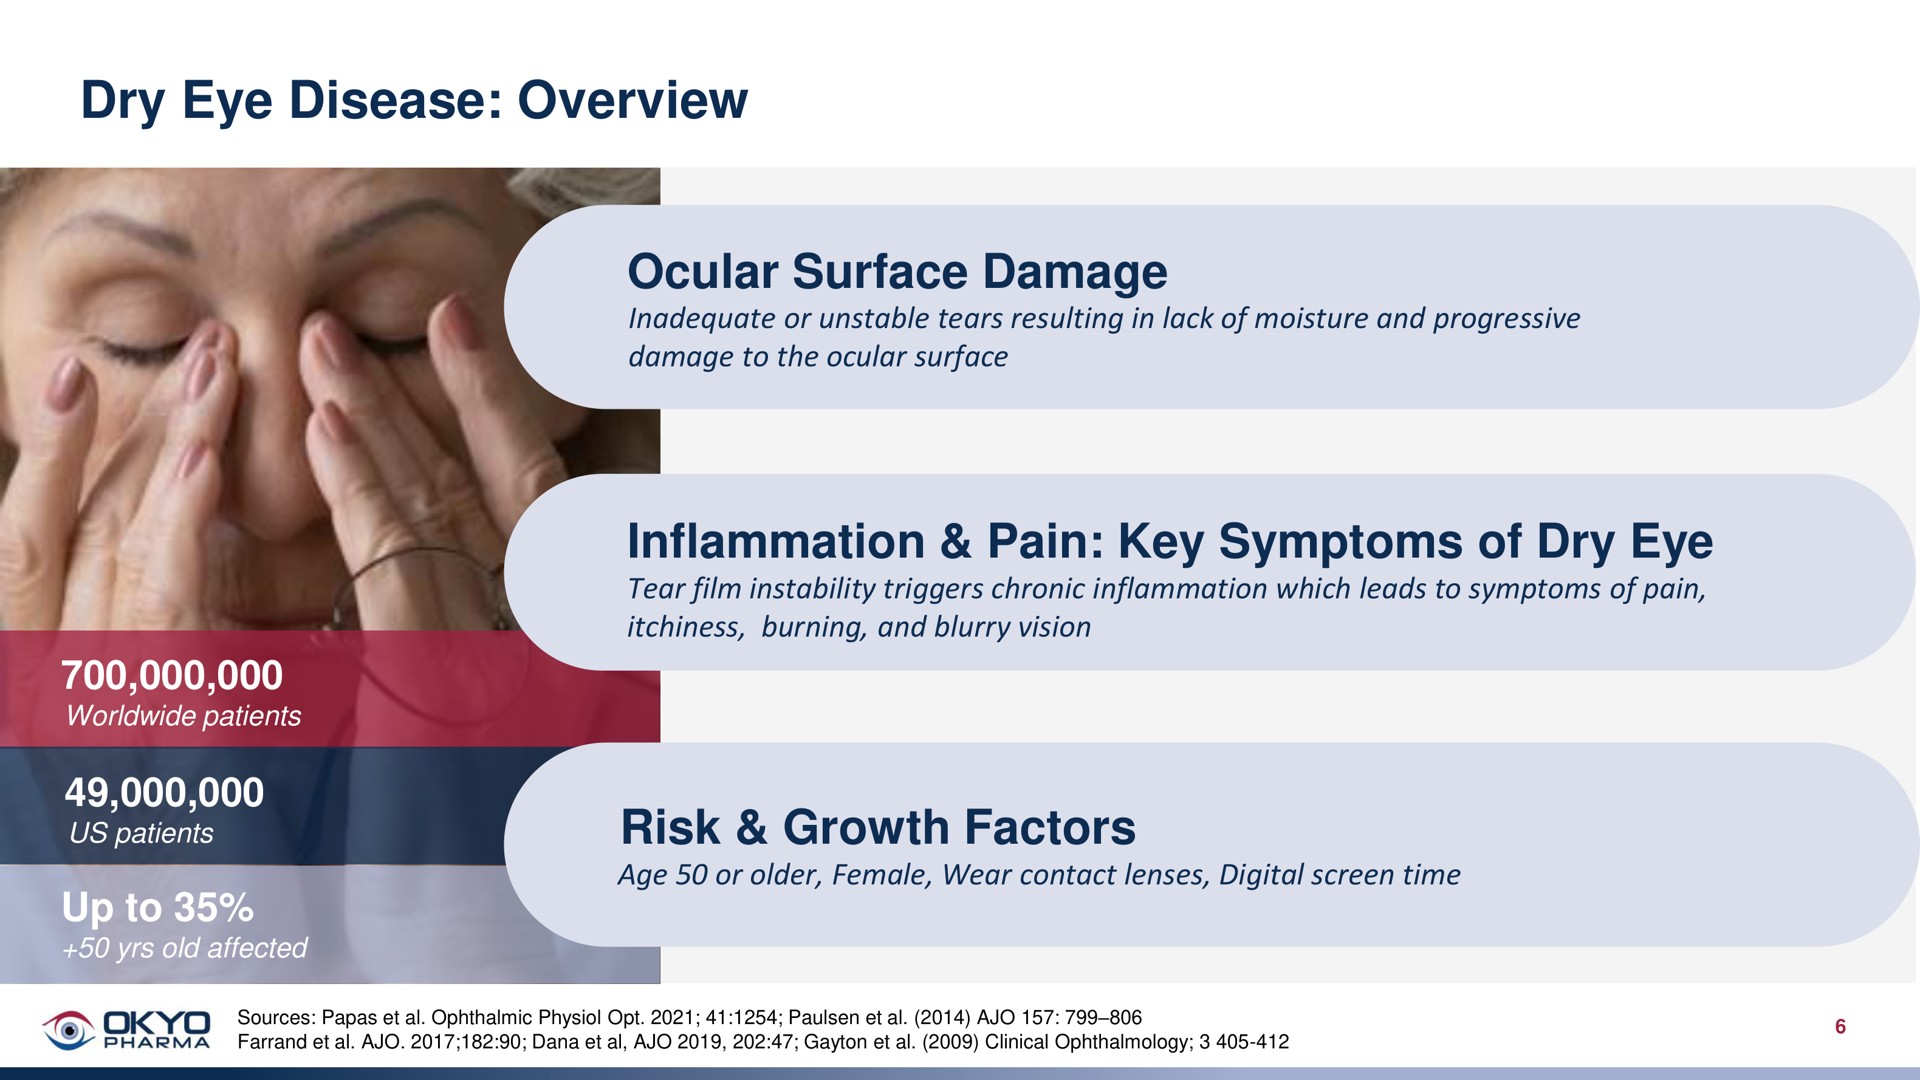 dry eye disease overview ocular surface damage inflammation pain key symptoms of dry eye risk growth factors | OKYO Pharma